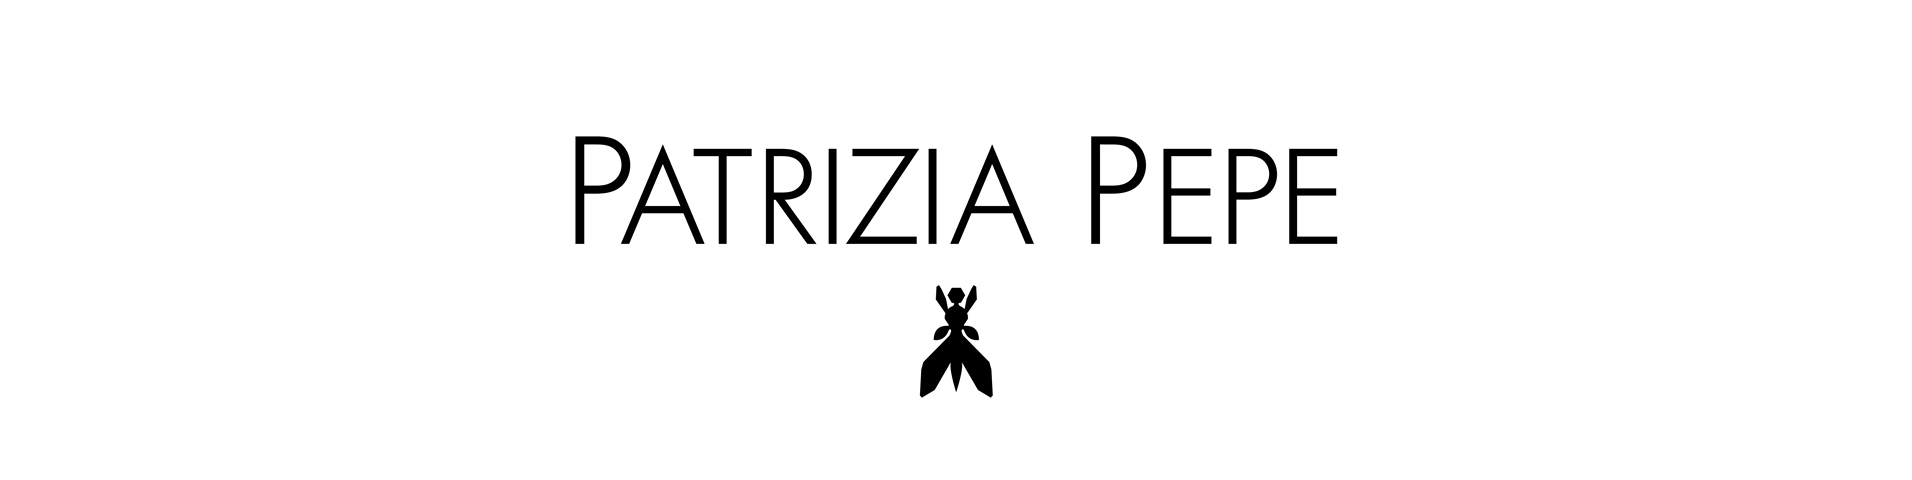 Patrizia Pepe логотип